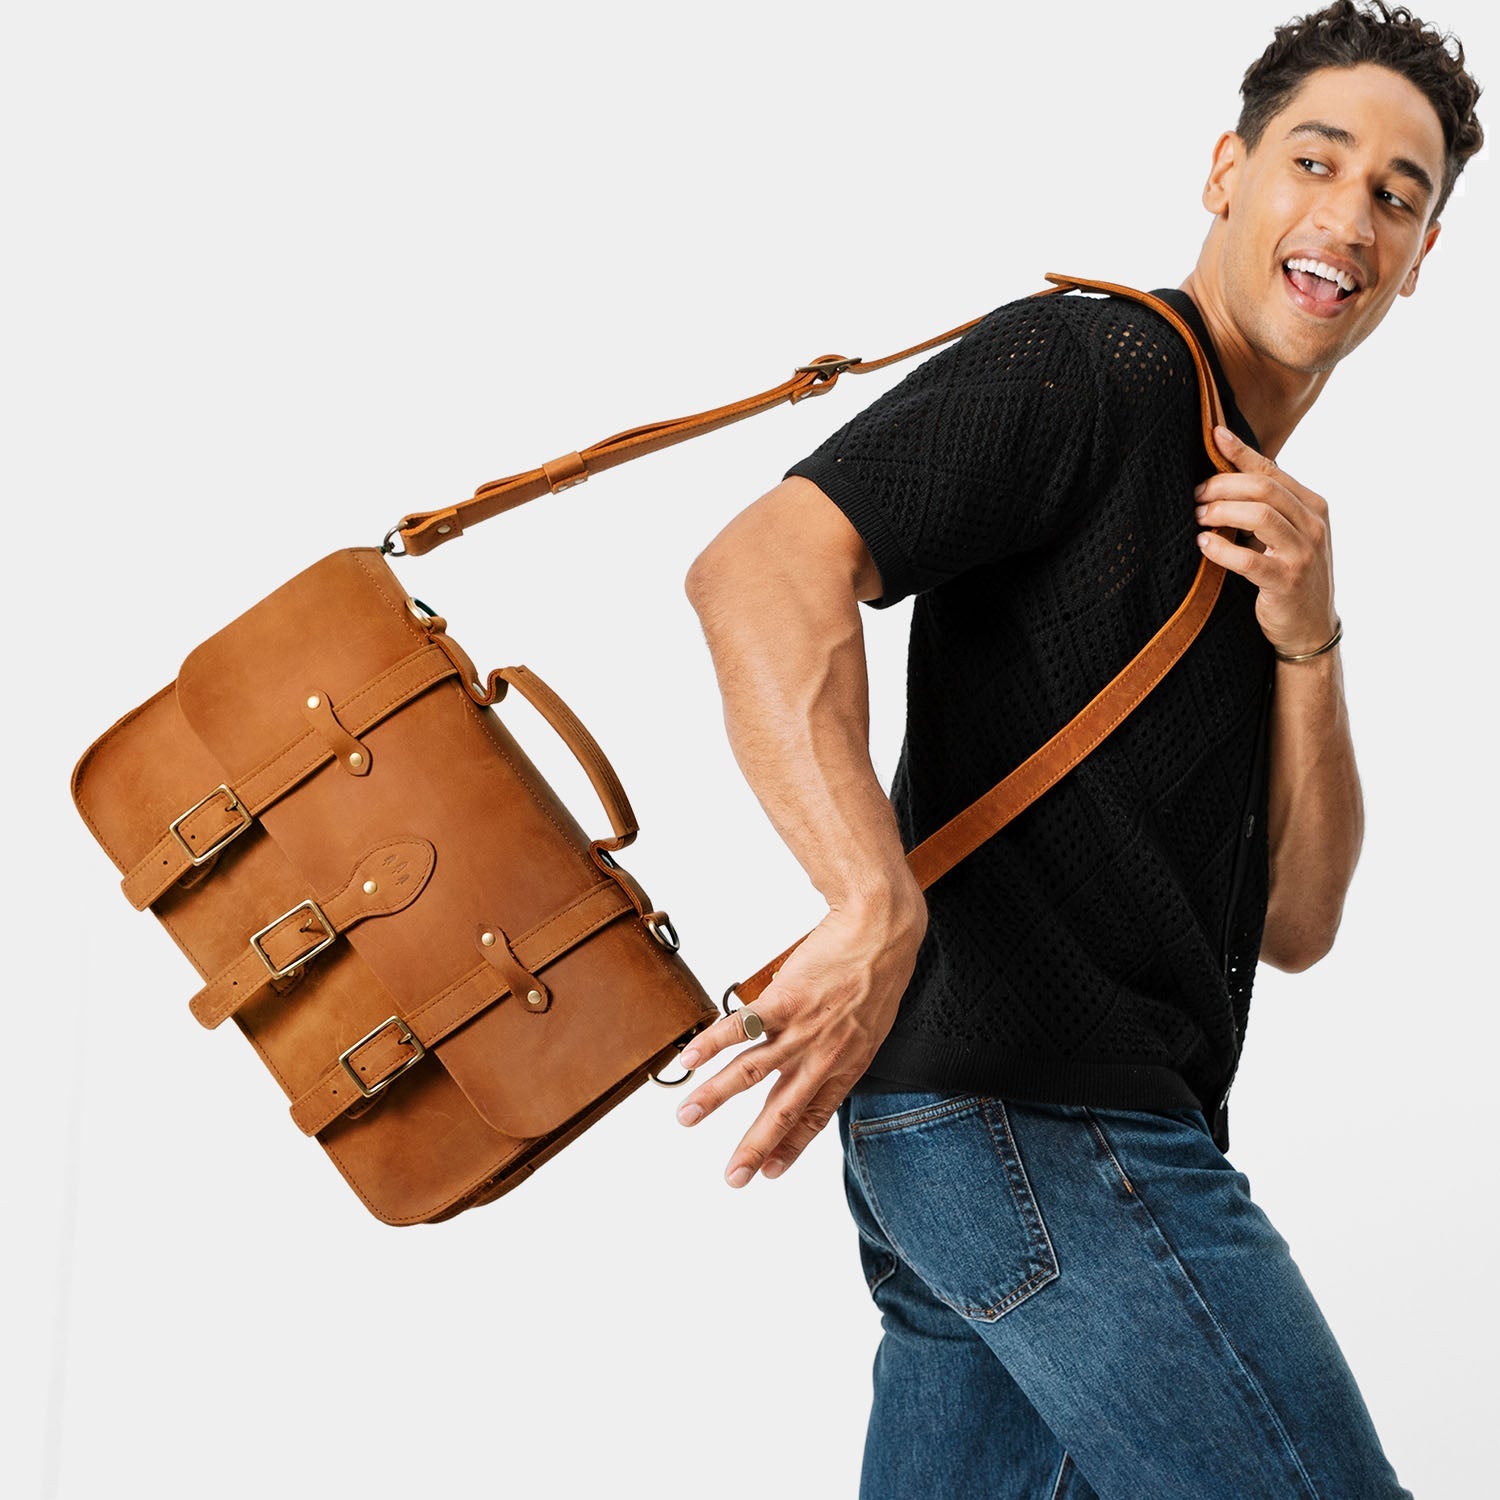 Buy Messenger Bag Men, 13 Leather Men's Briefcase, Laptop Bag, Work Bag,  Handmade Cross-body Bag, Retro Metropolitan Fashion, Urban Style, Gift  Online in India - Etsy